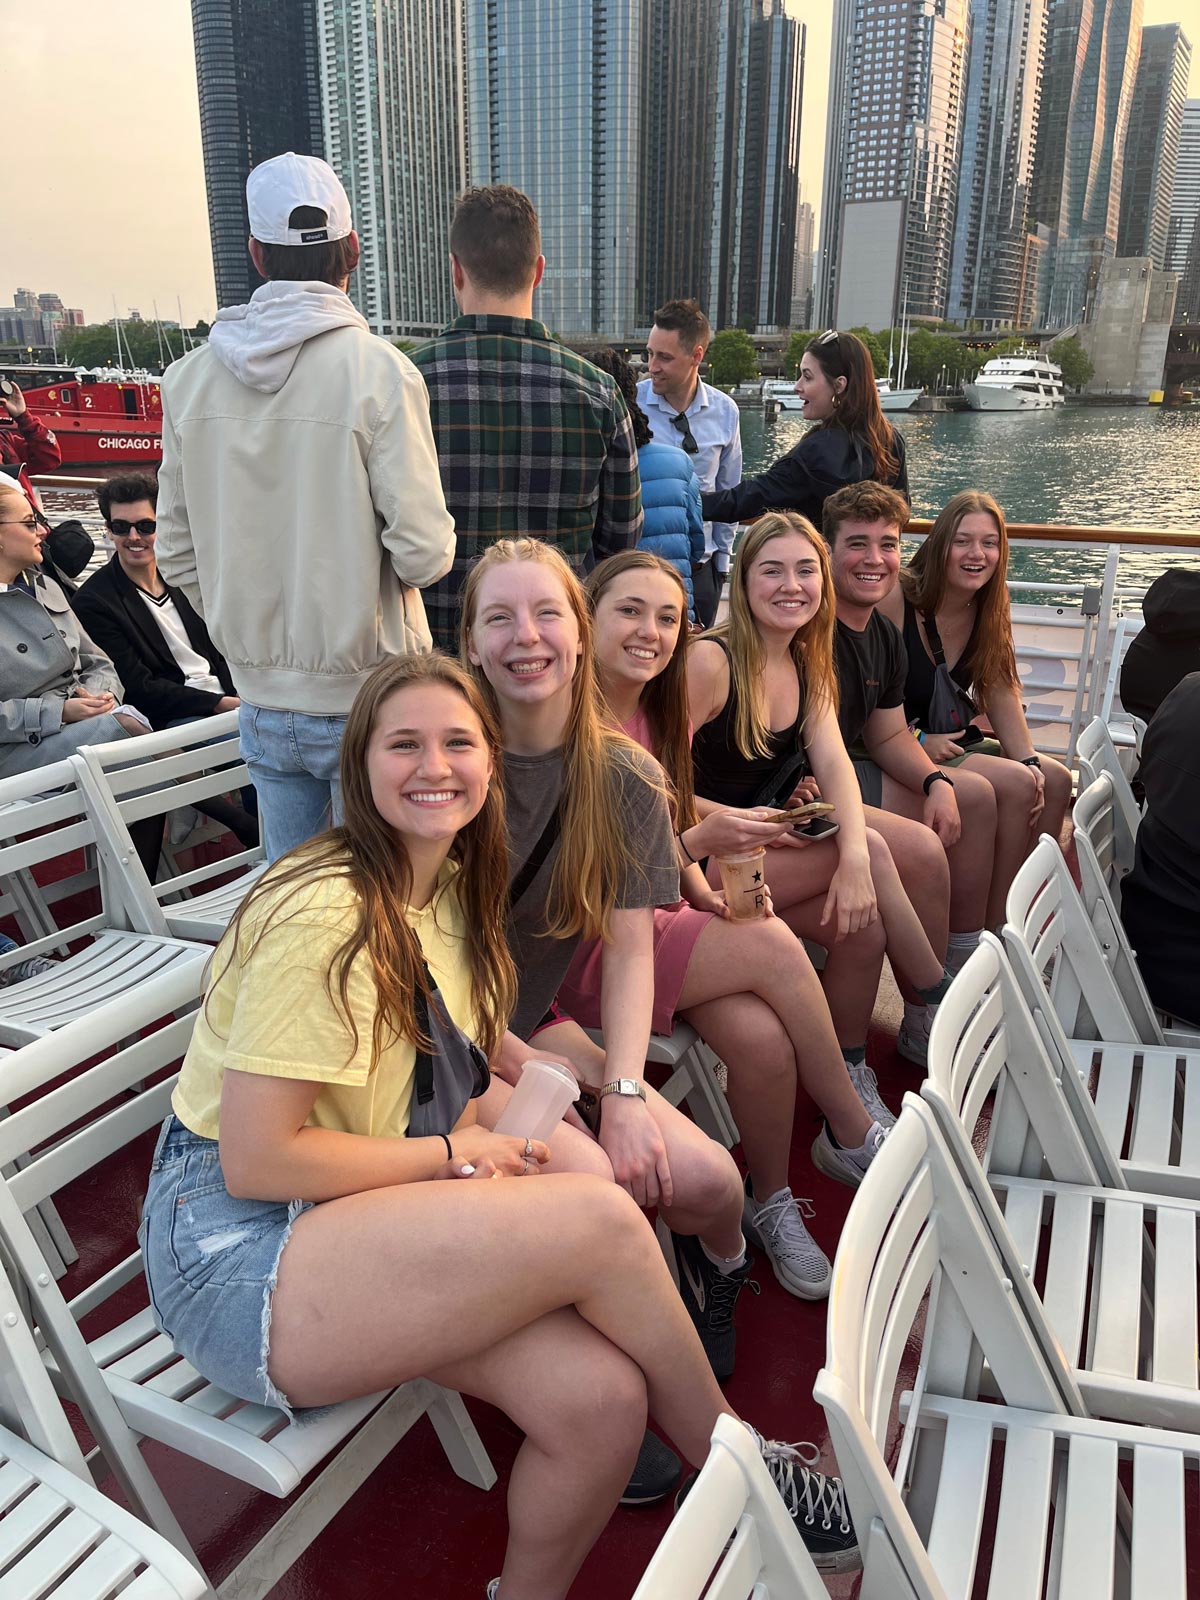 Bonner Leader cruise in Chicago